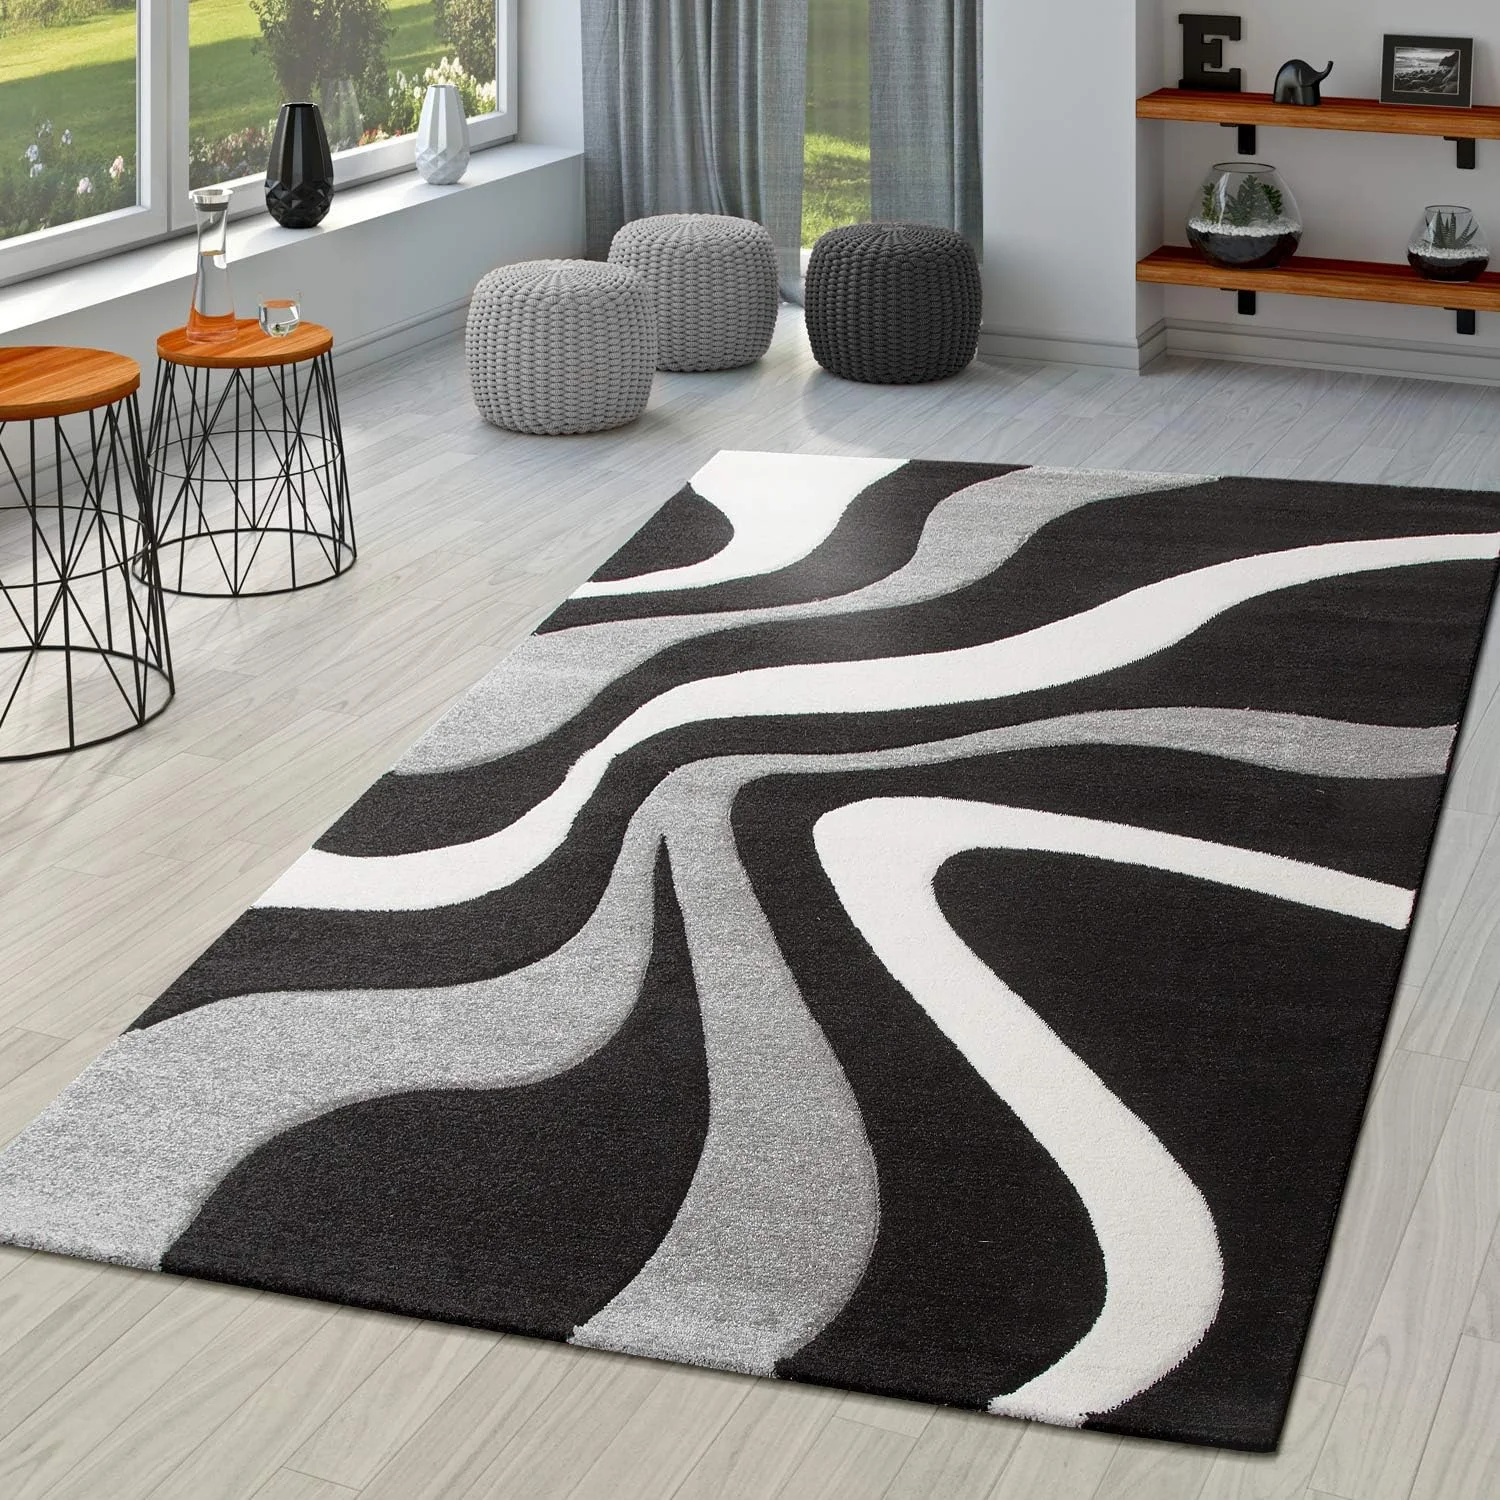 Sisal carpet enhancing the elegance of a living room setup.